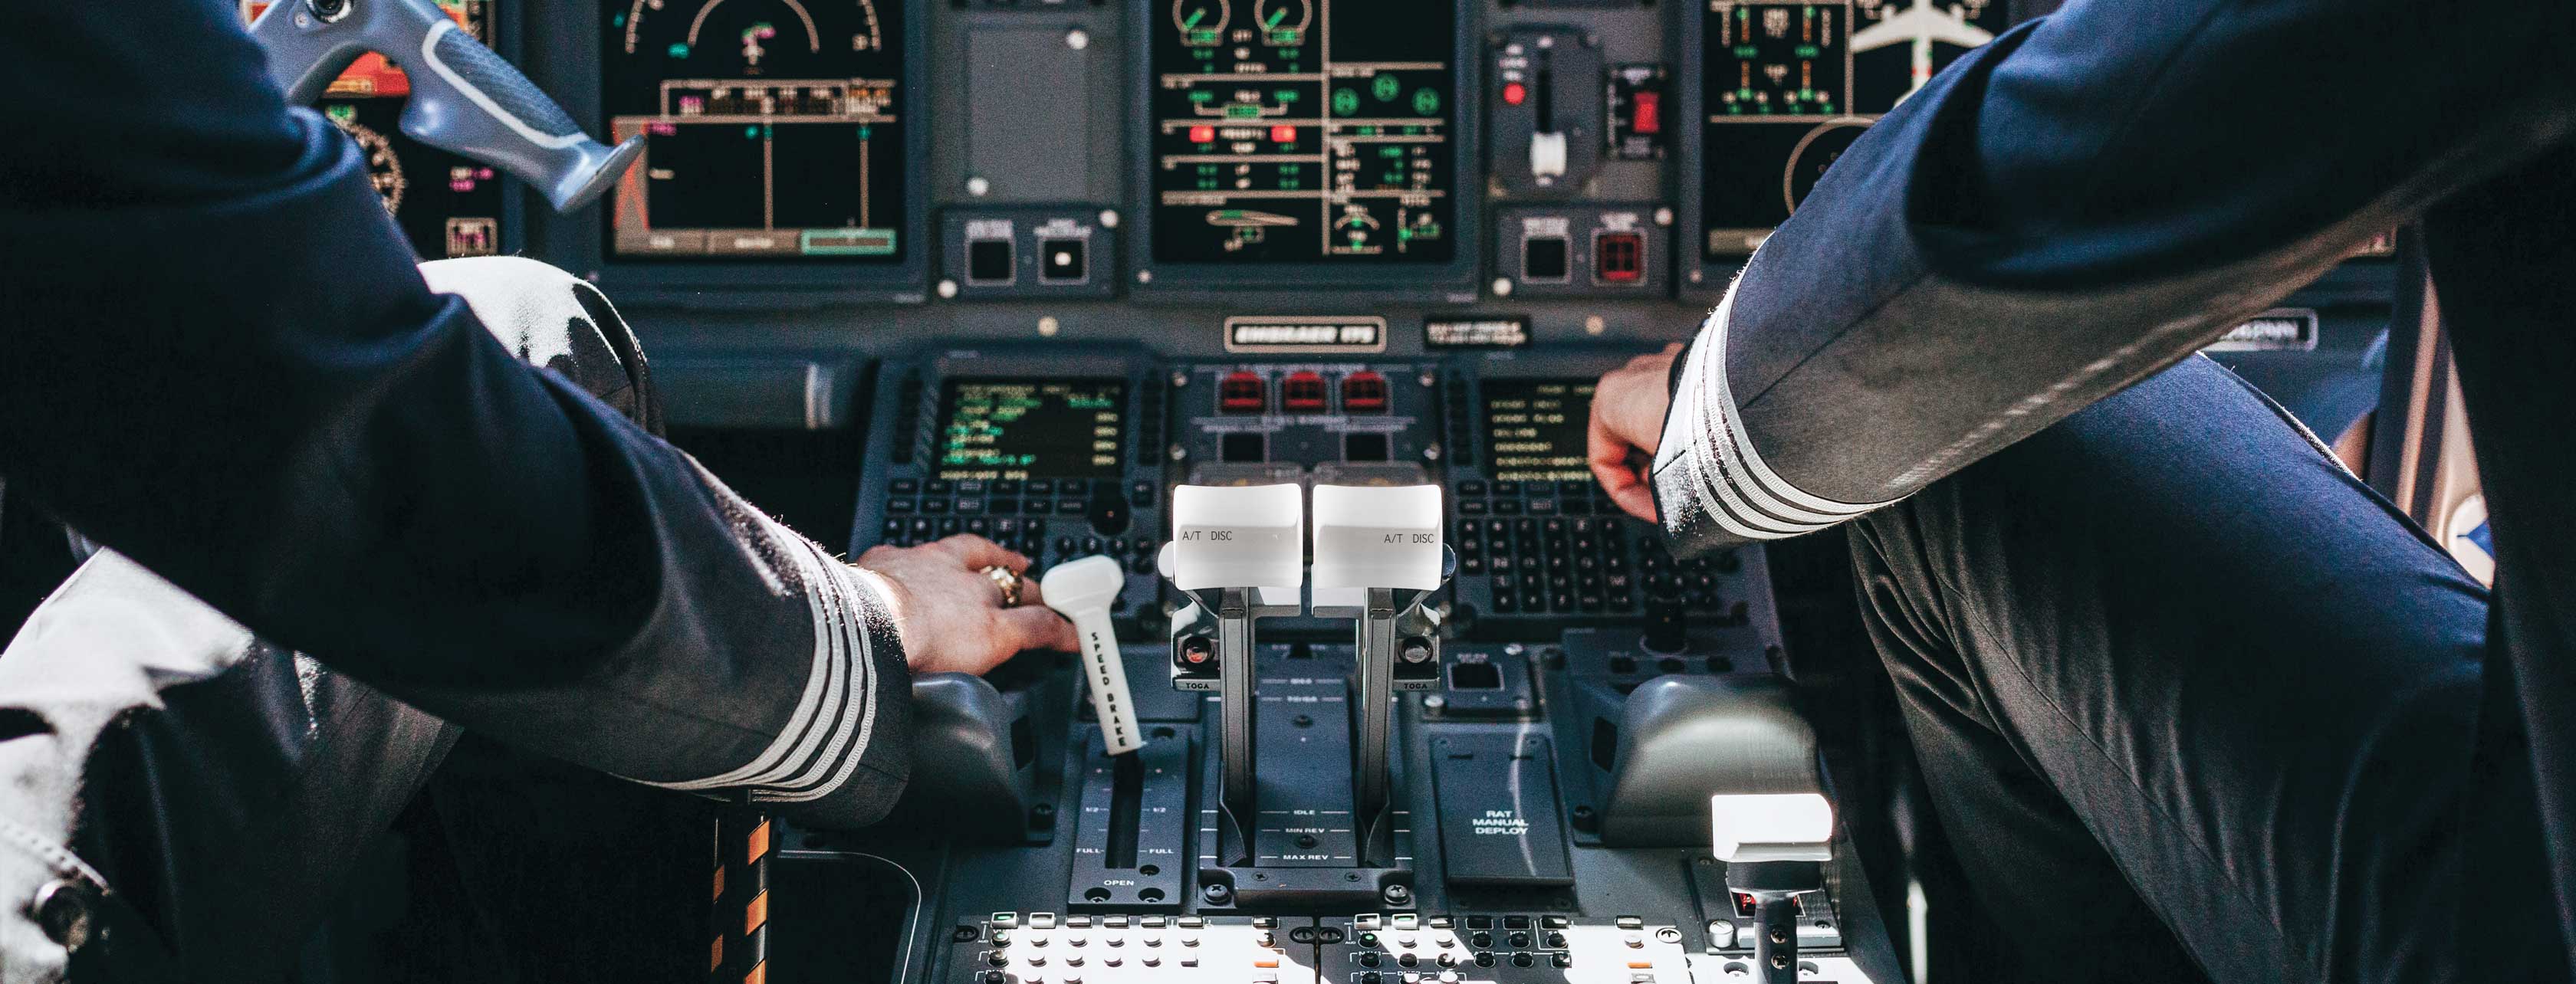 Current Airline Pilot Hiring Outlook - ERJ 175 Instrument Panel